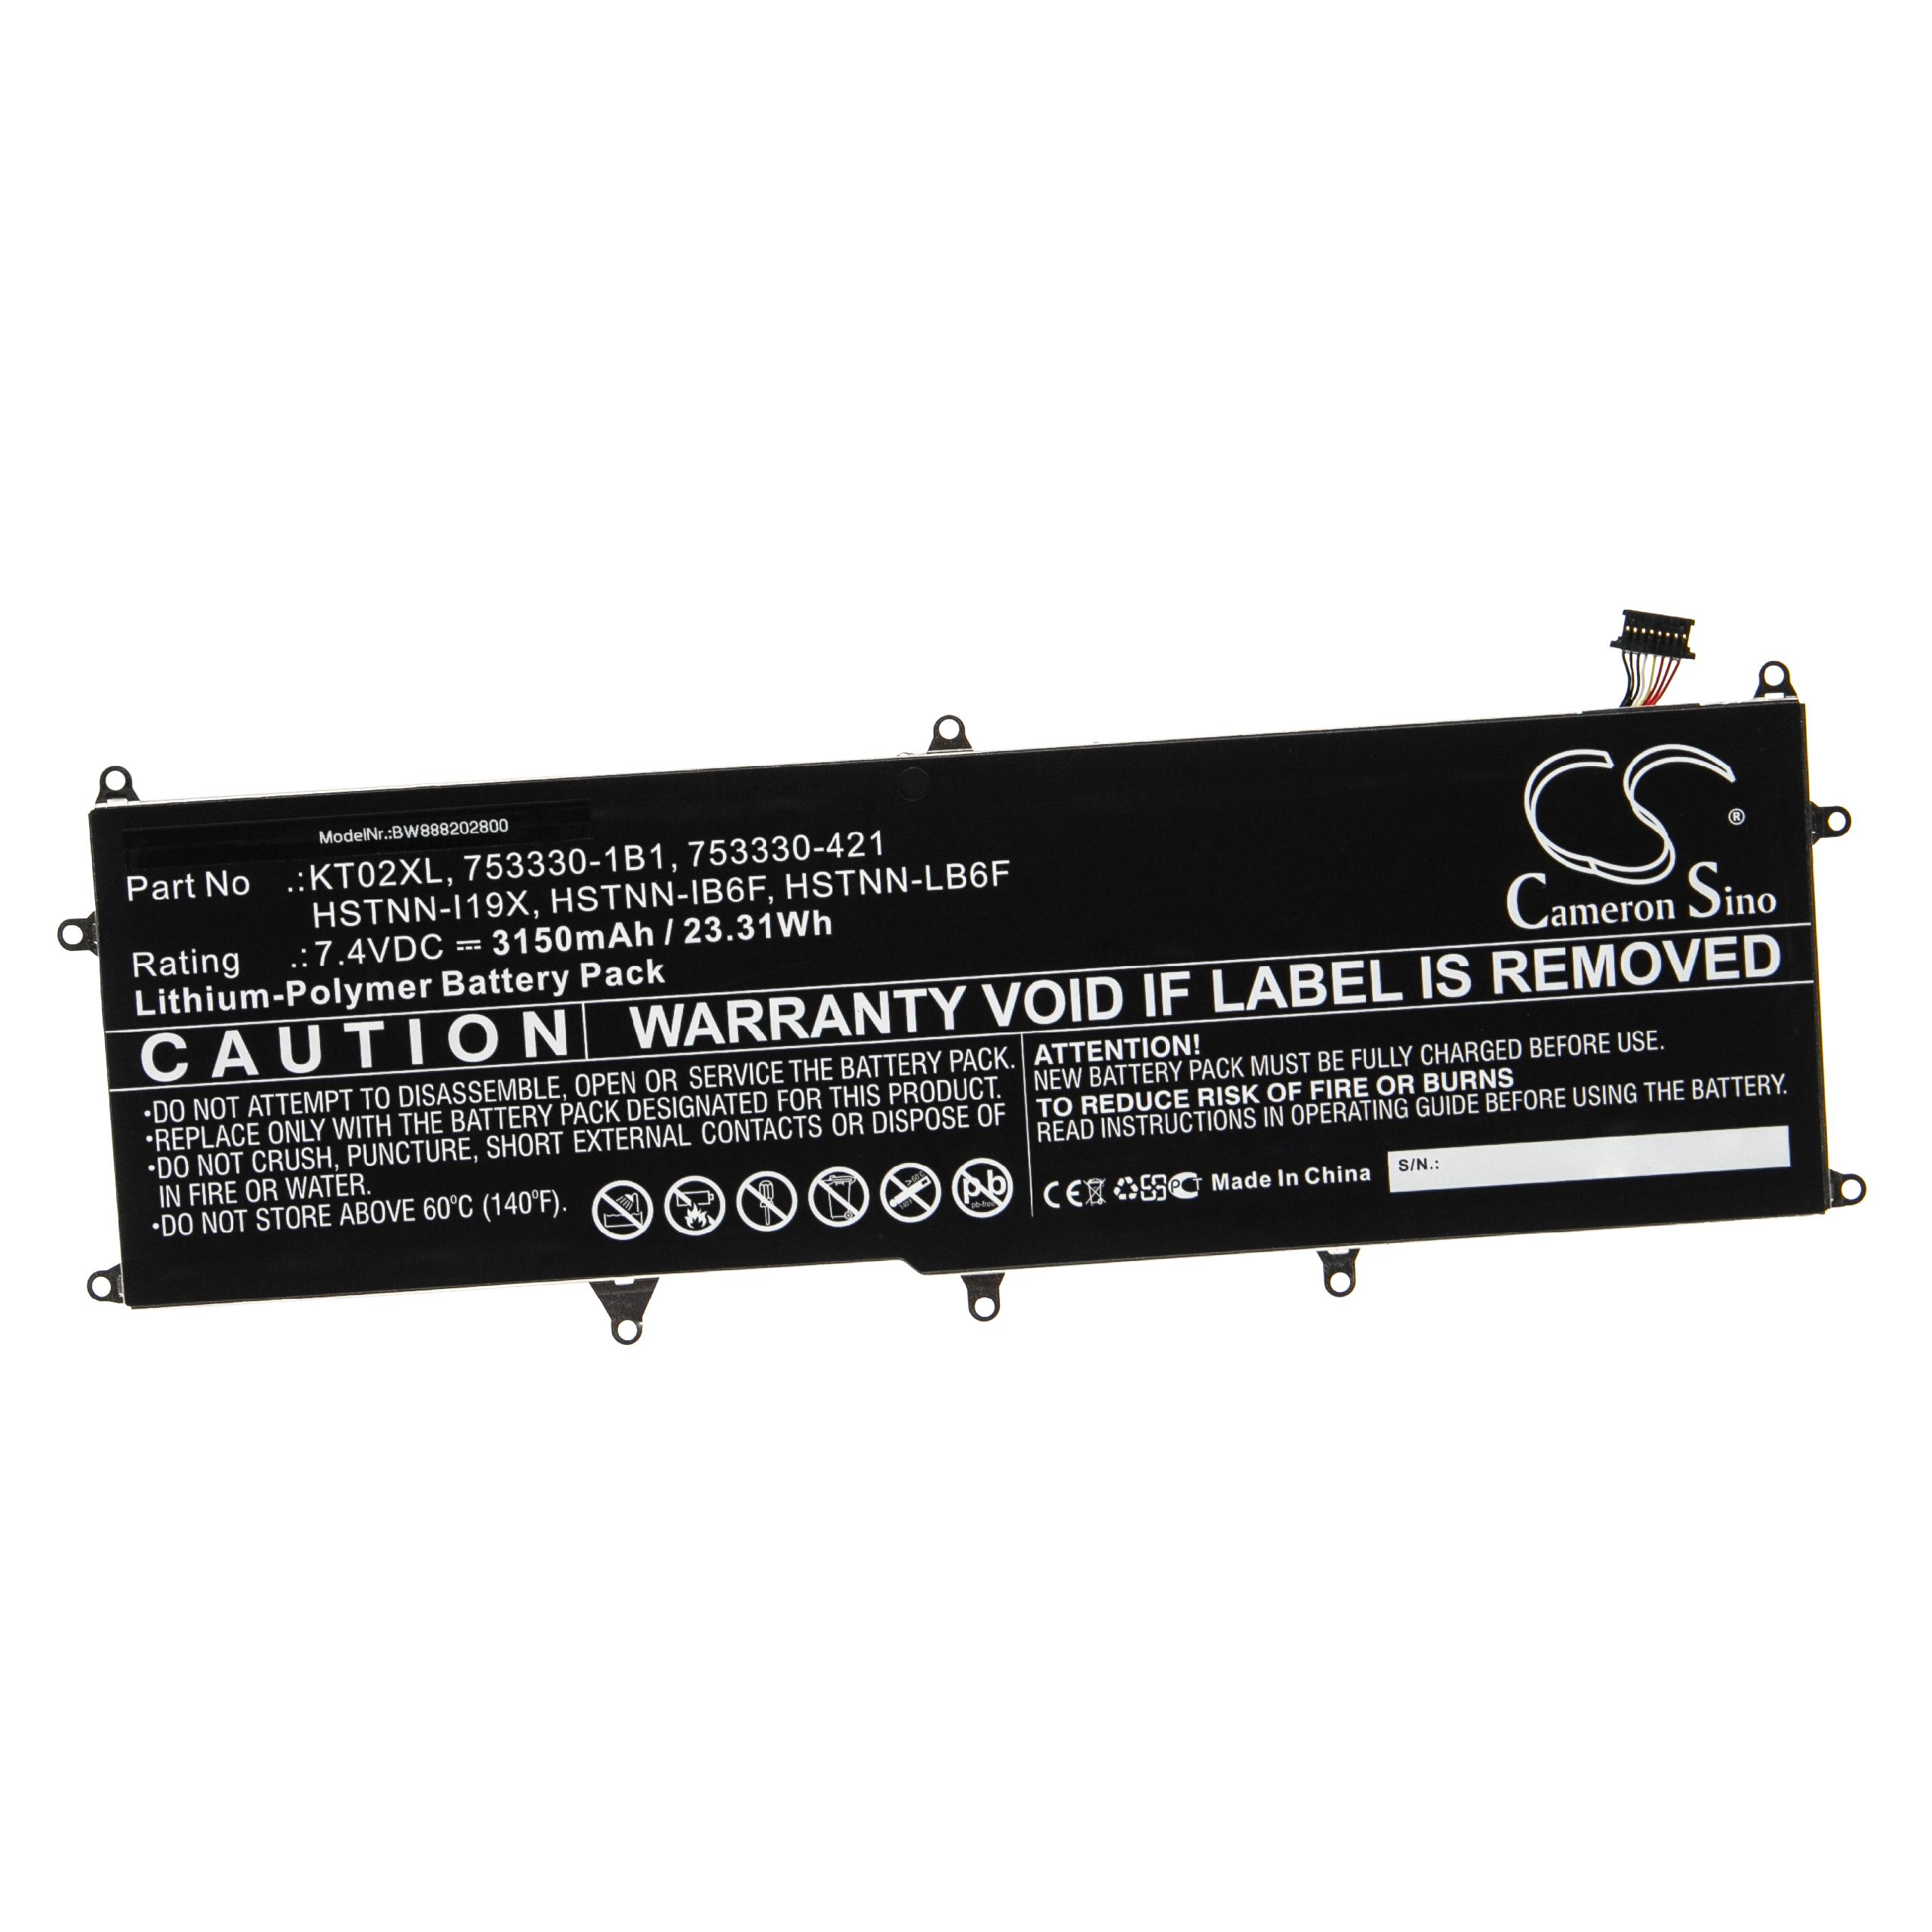 Wireless Keyboard Battery Replacement for HP 753330-1B1, HSTNN-I19X, 753330-421 - 3150mAh 7.4V Li-polymer